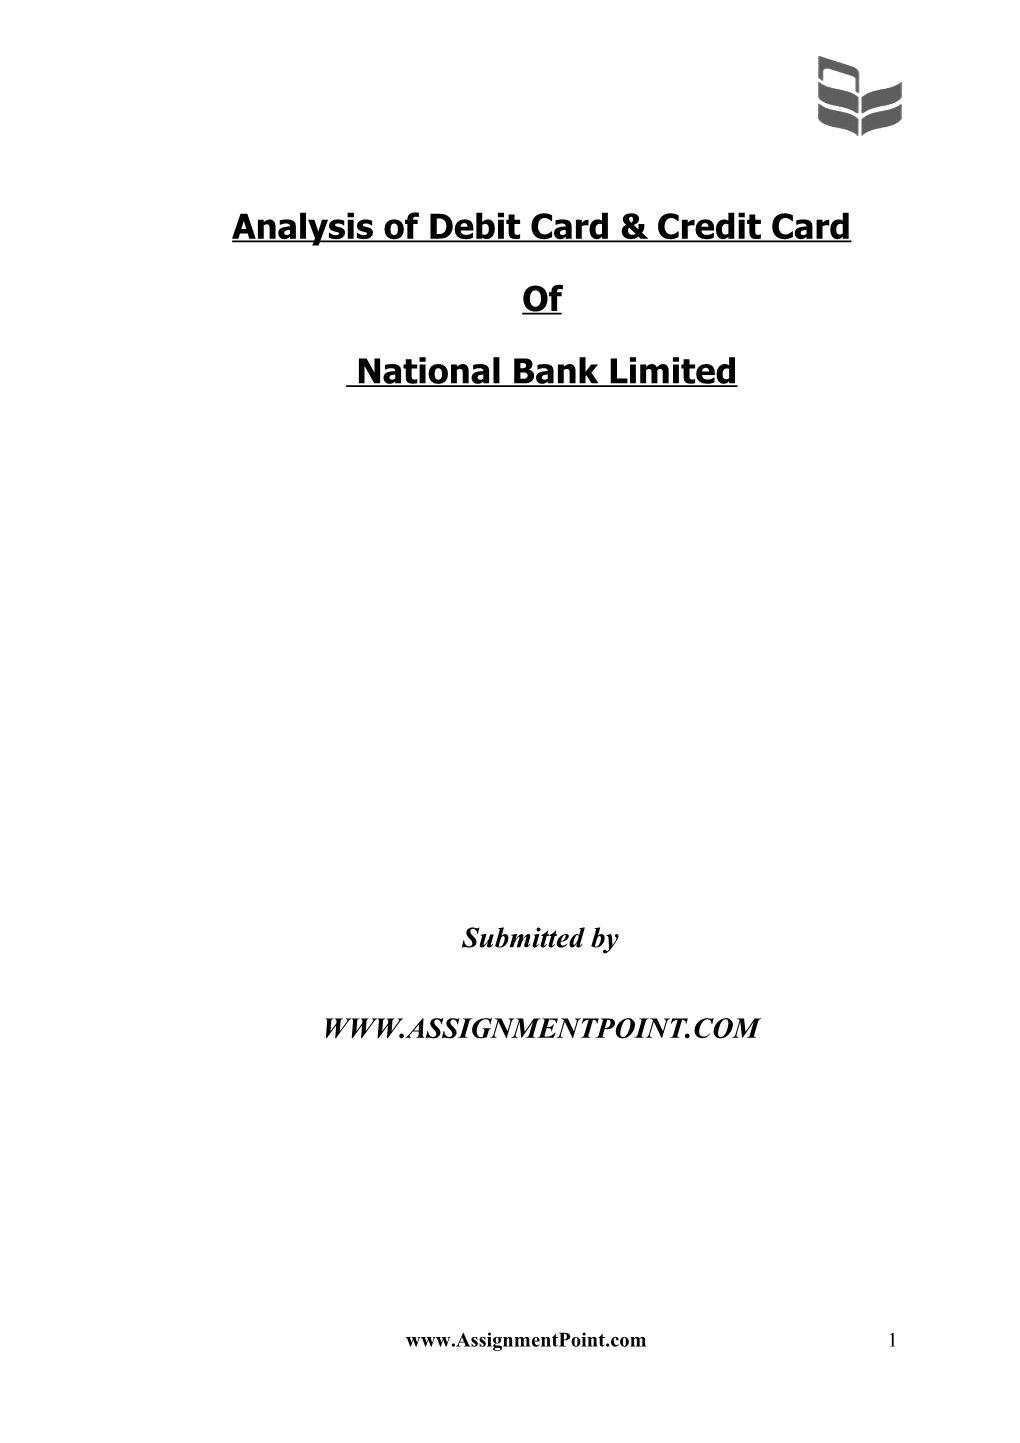 Analysis of Debit Card & Credit Card